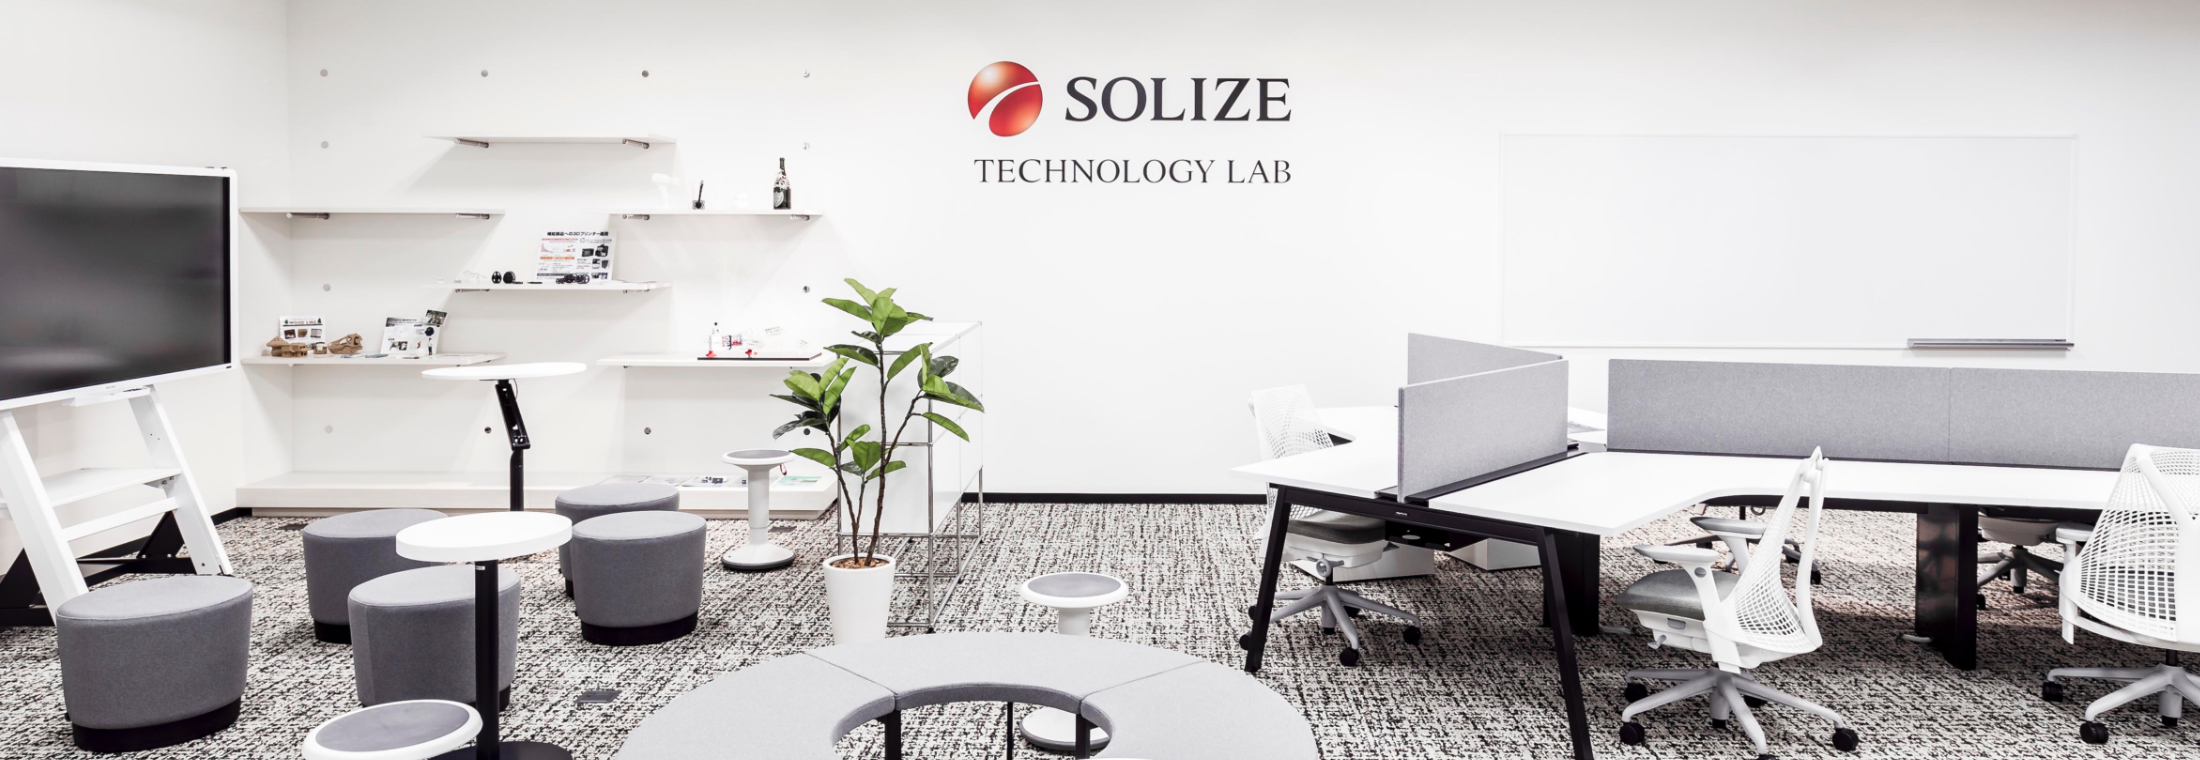 SOLIZE テクノロジーラボのイメージ